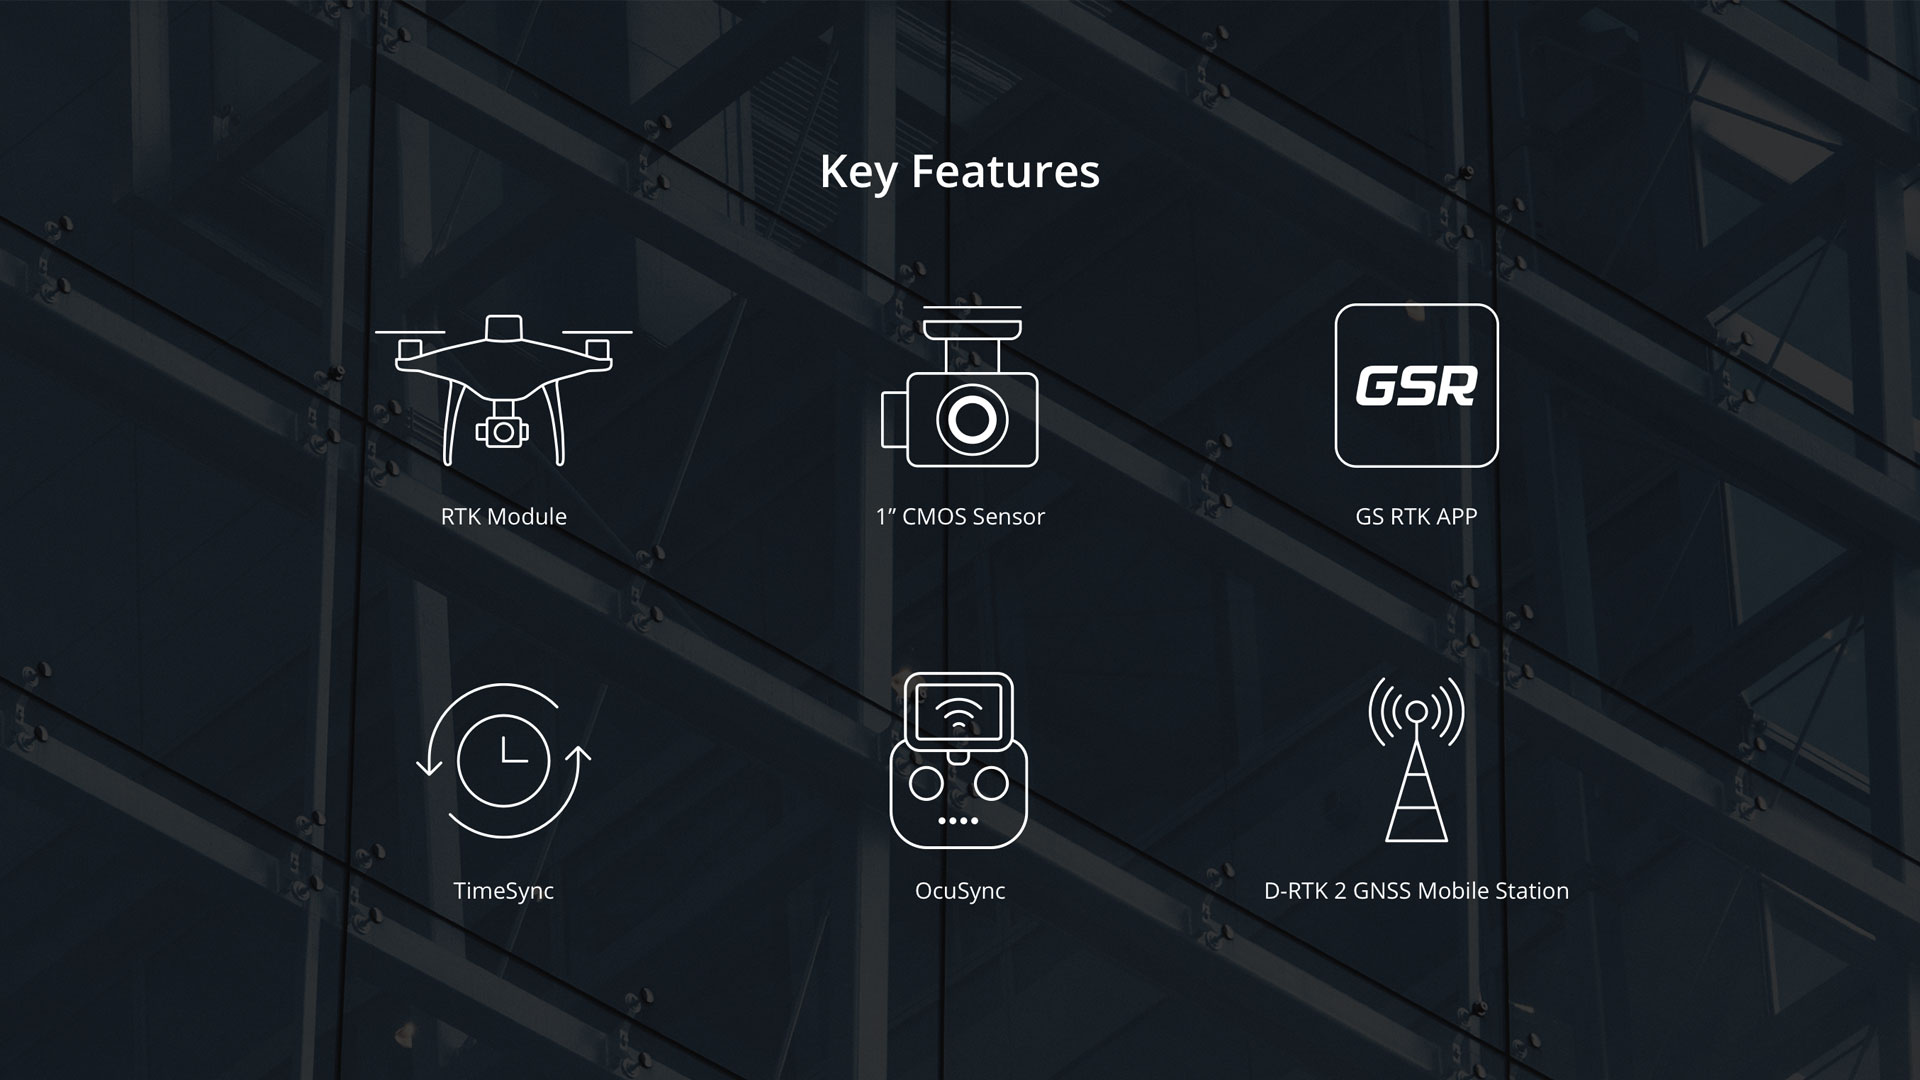 DJI Phantom 4 RTK Key Features